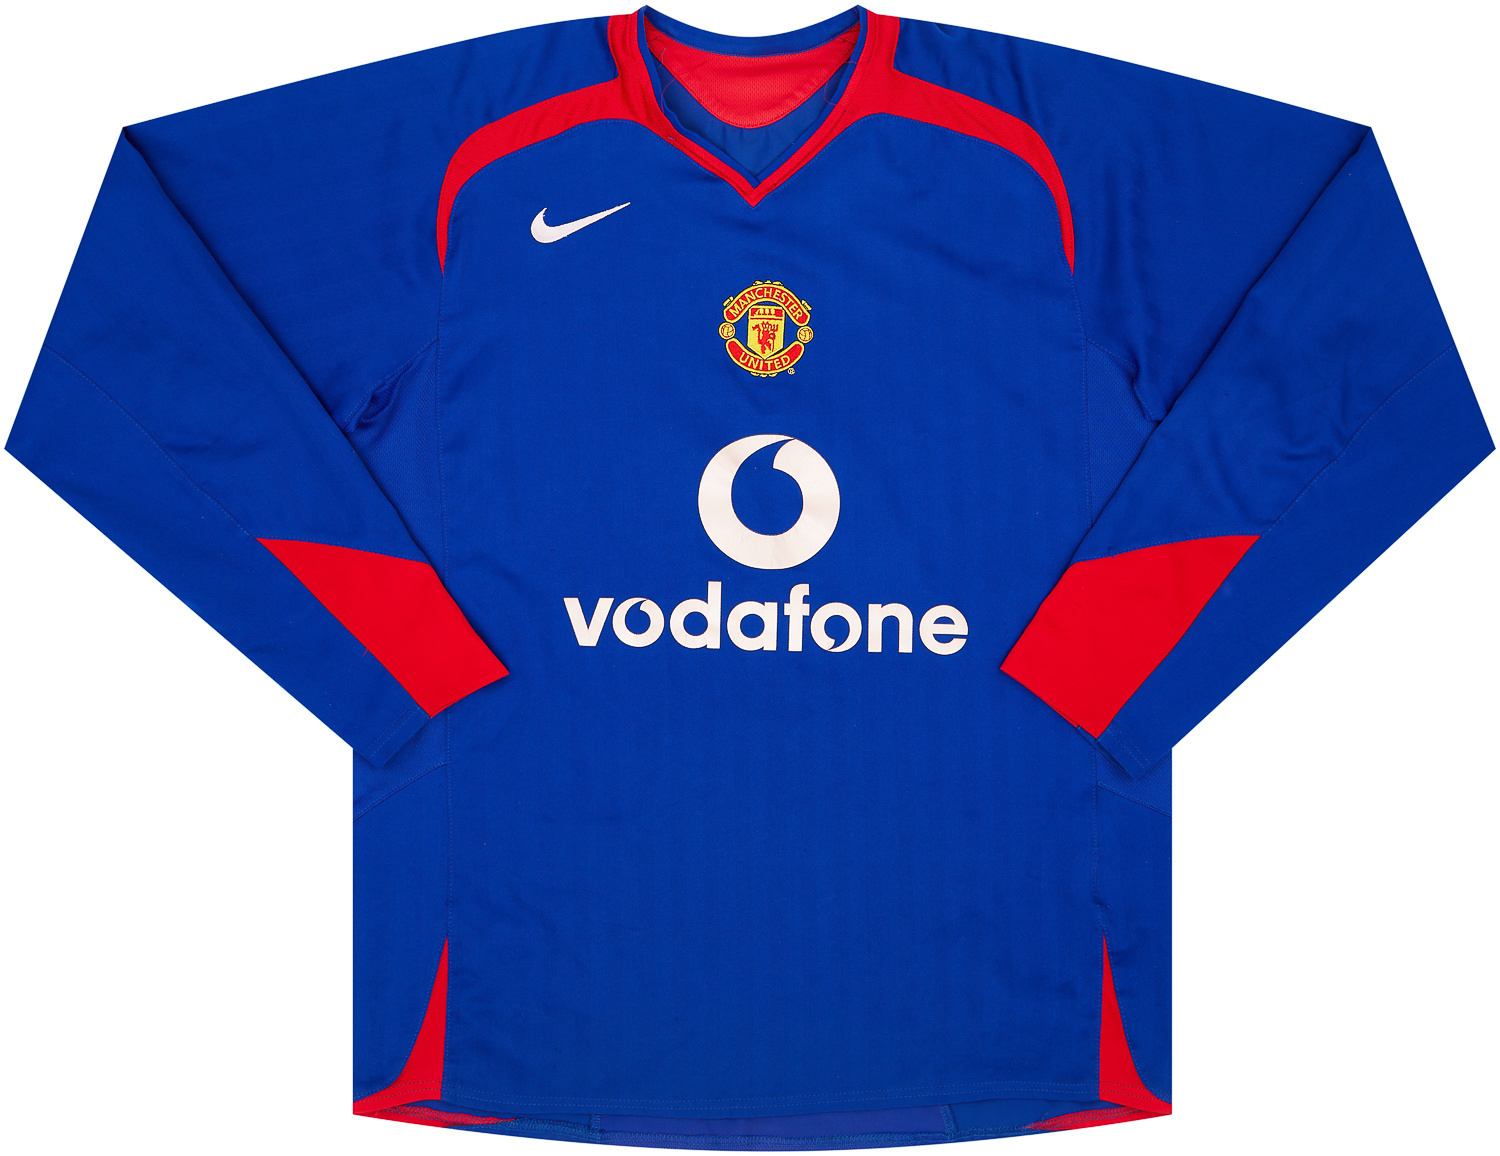 2005-06 Manchester United Away Shirt - 5/10 - ()